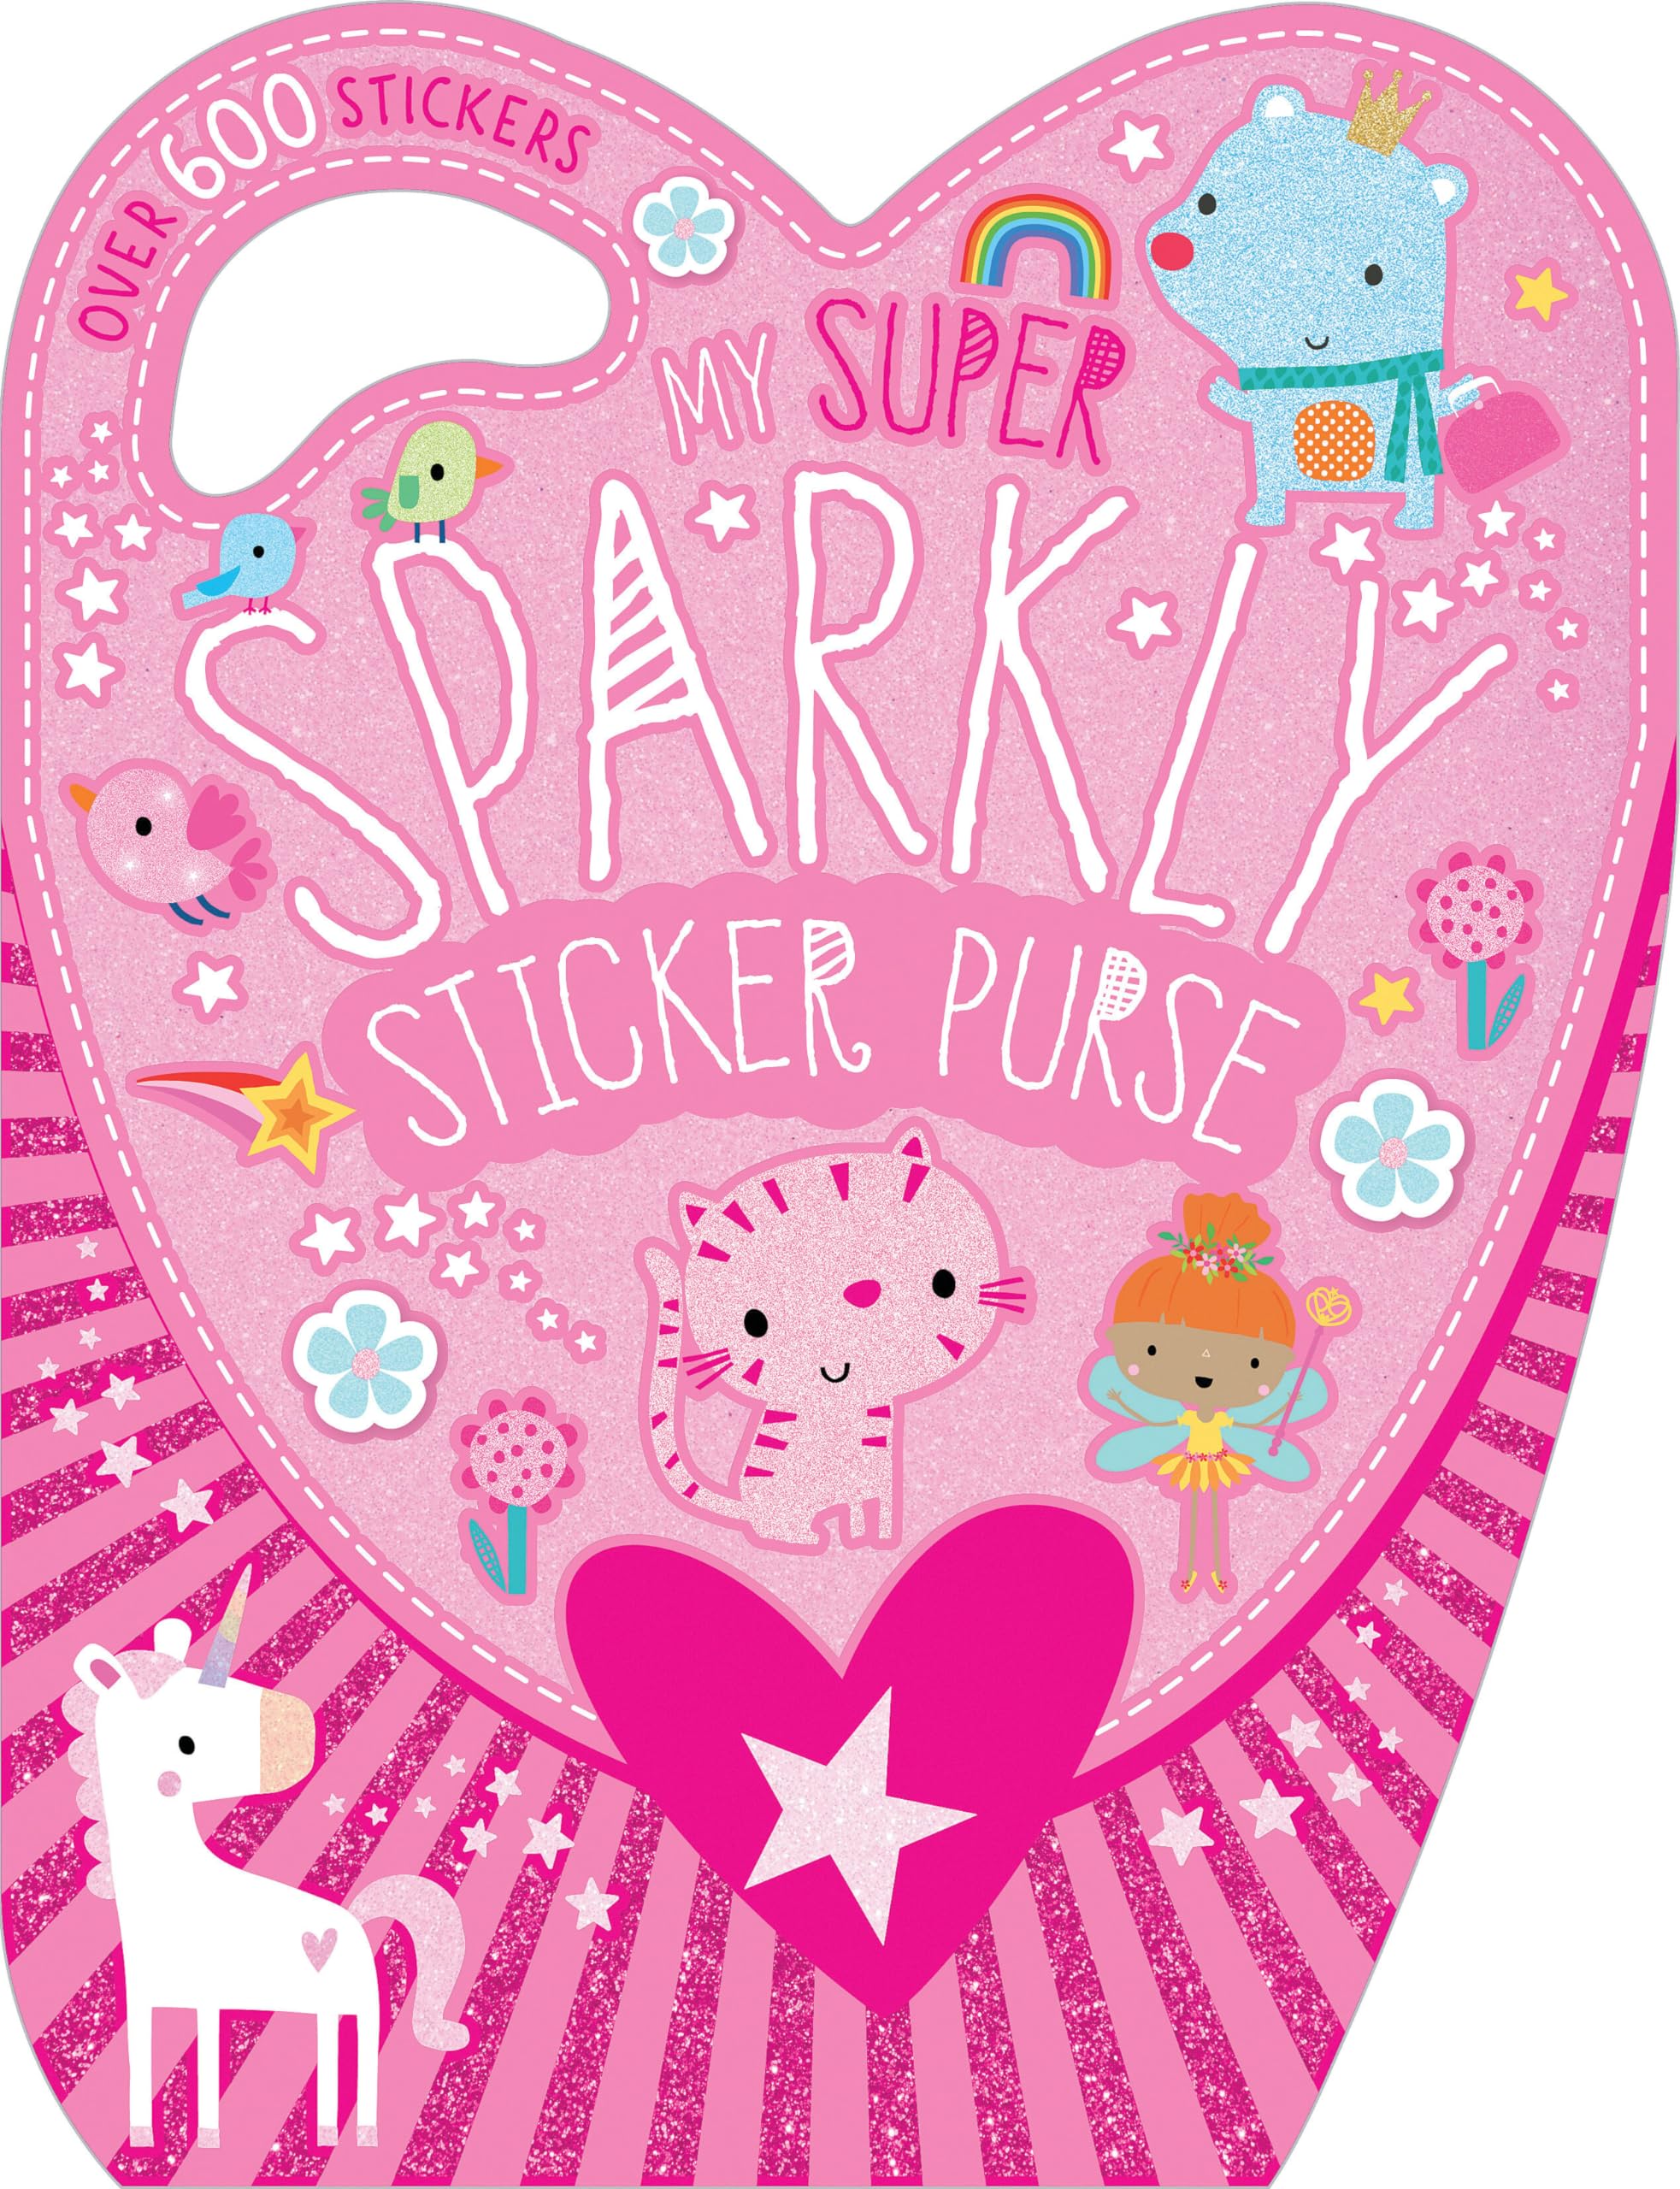 My Super Sparkly Sticker Purse - Picture 1 of 1